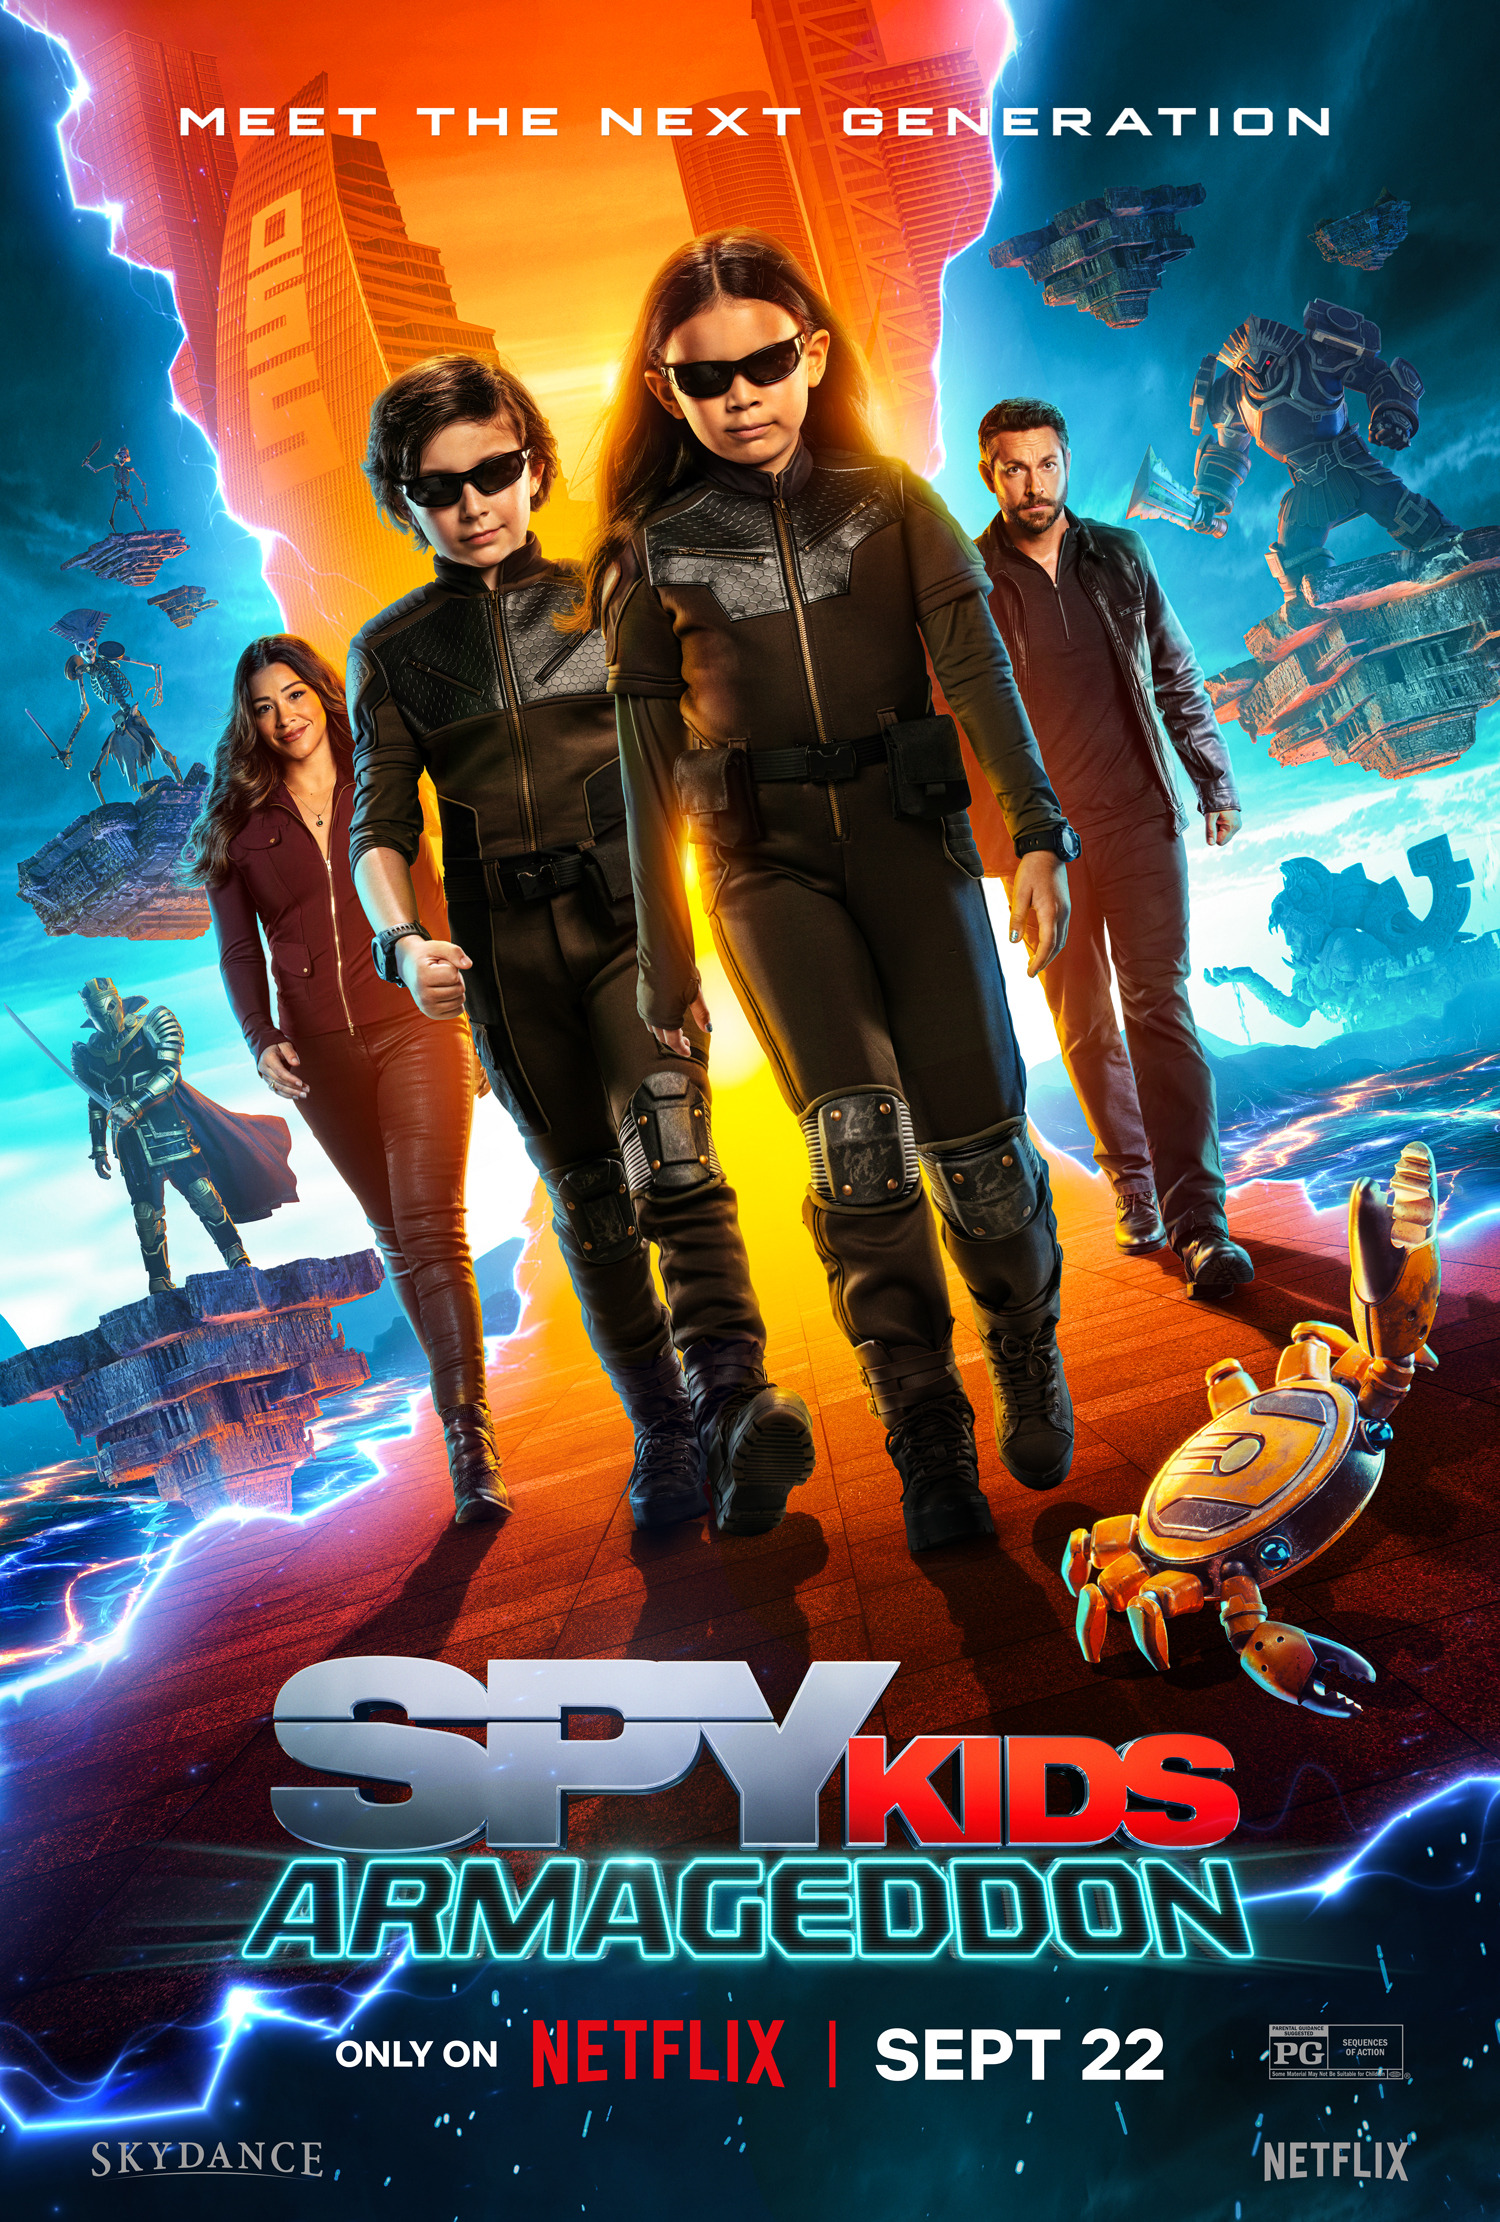 Spy Kids Armageddon Trailer & Poster